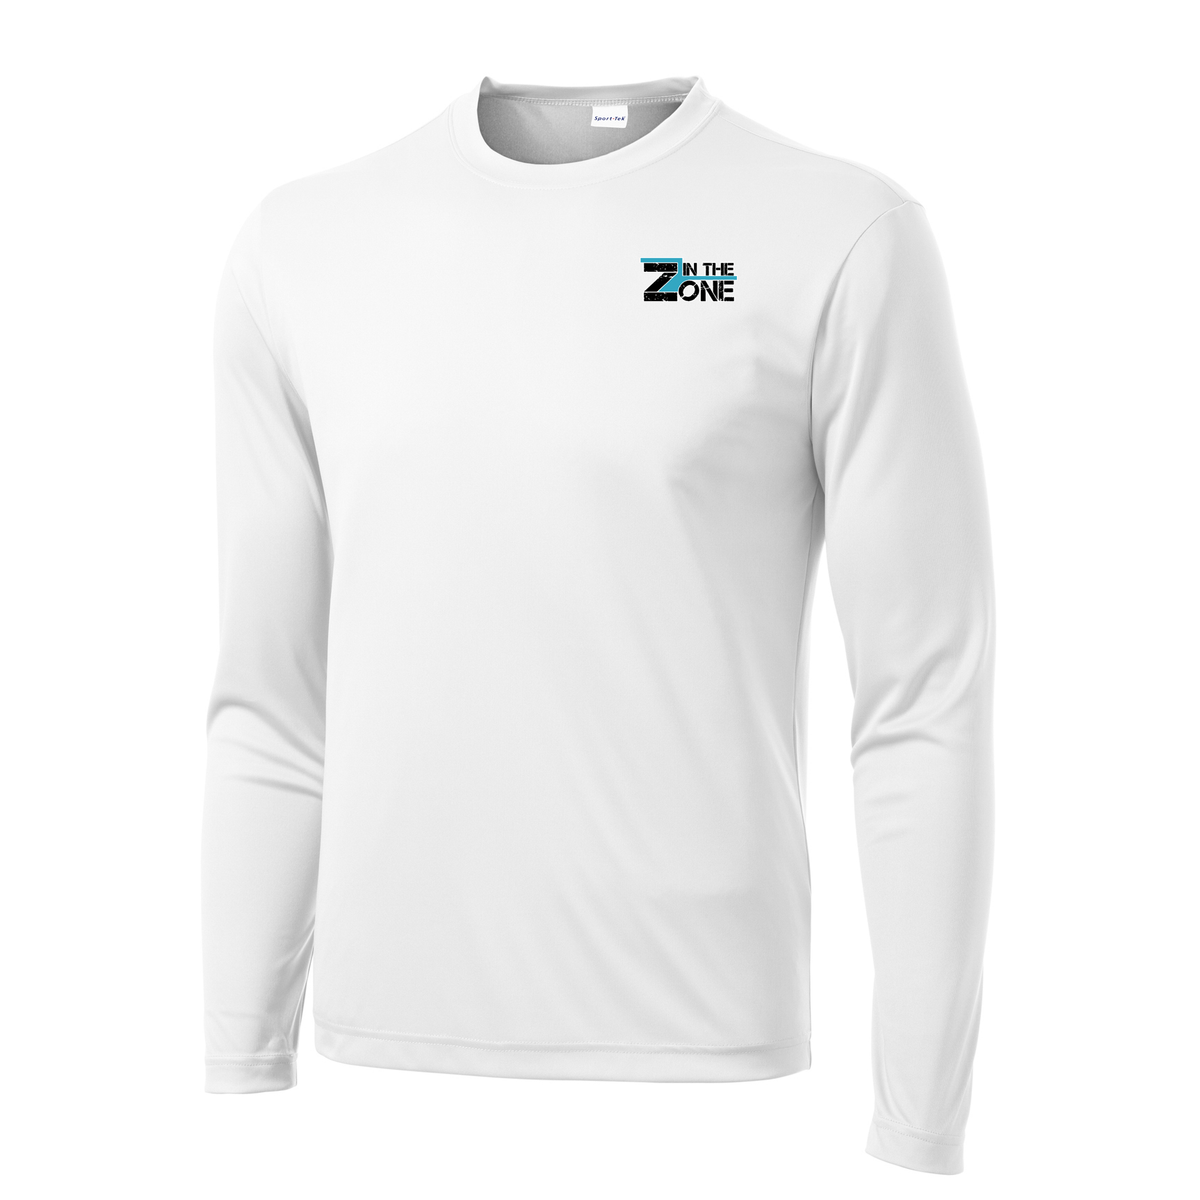 The Zone Long Sleeve Performance Shirt